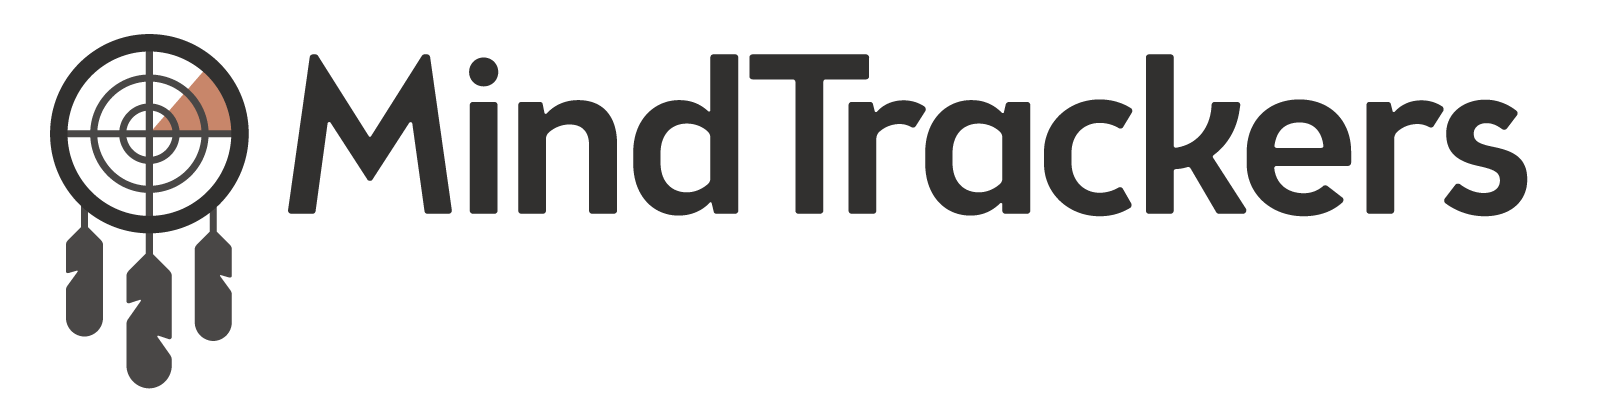 MindTrackers-final-logo